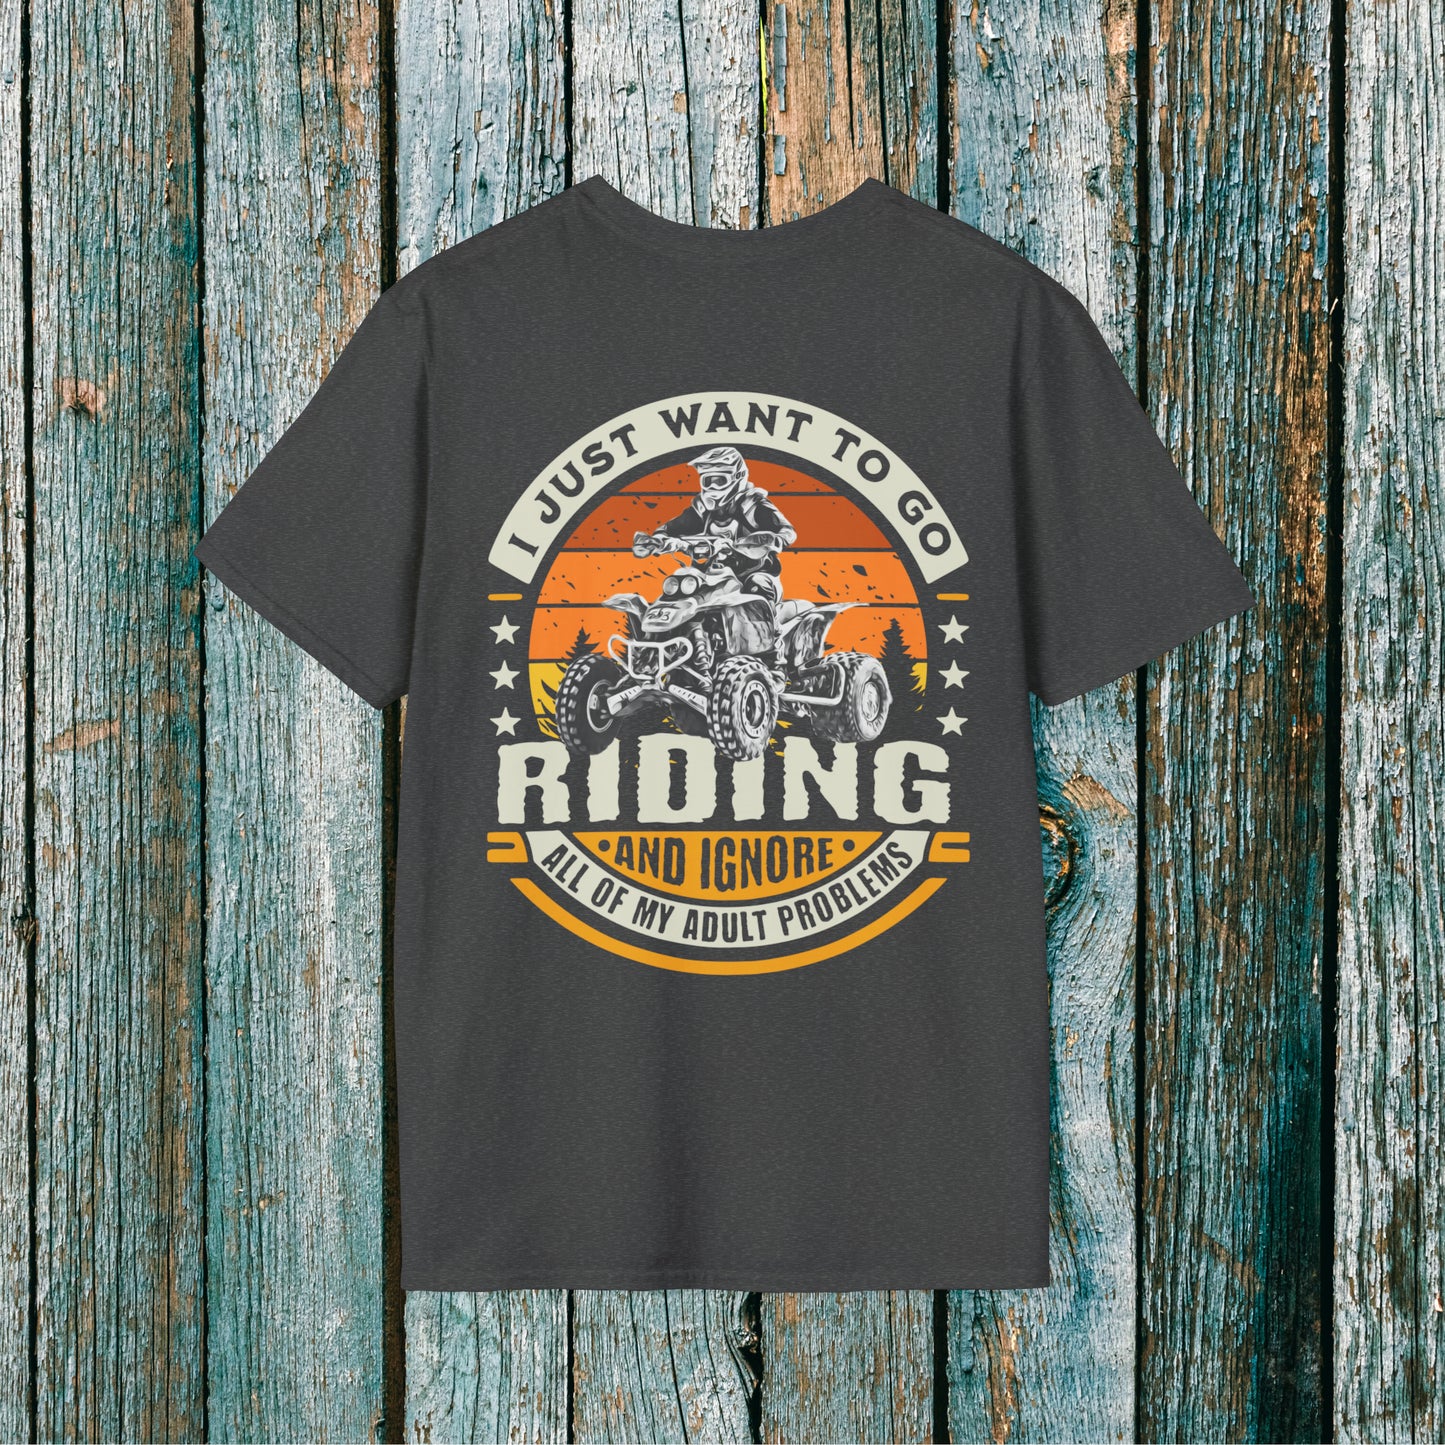 Mens Racing Shirt | Go Riding and Ignore Adult Problems | Honda 400 EX ATV on front & back | ATV Riding Shirt |  SOFT Cotton 2 SIDED Adult Unisex tee shirt | Four wheeler shirt